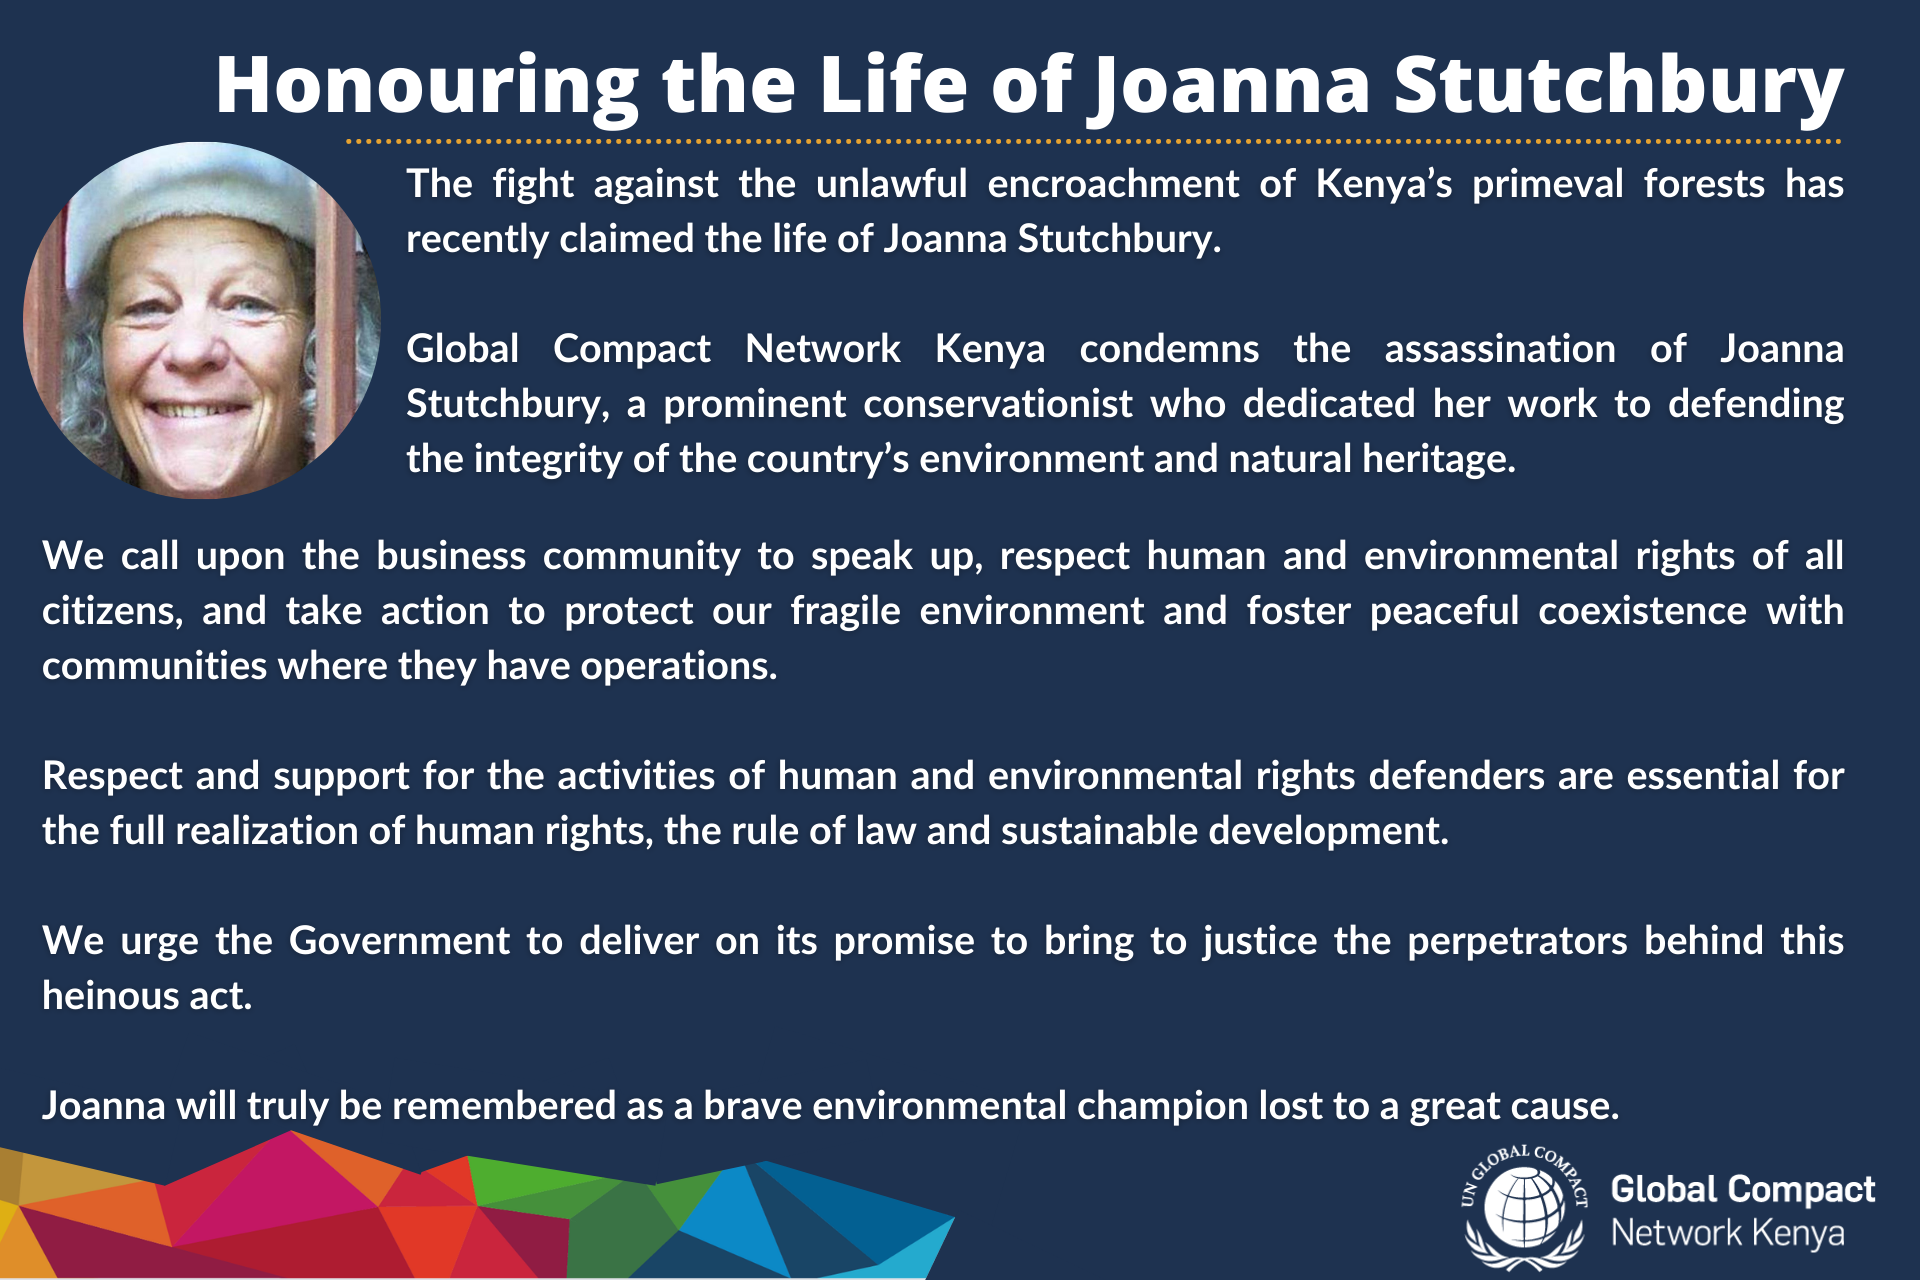 Statement condemning the killing of Joanna Stutchbury, a brave defender of Kenya’s environmental heritage